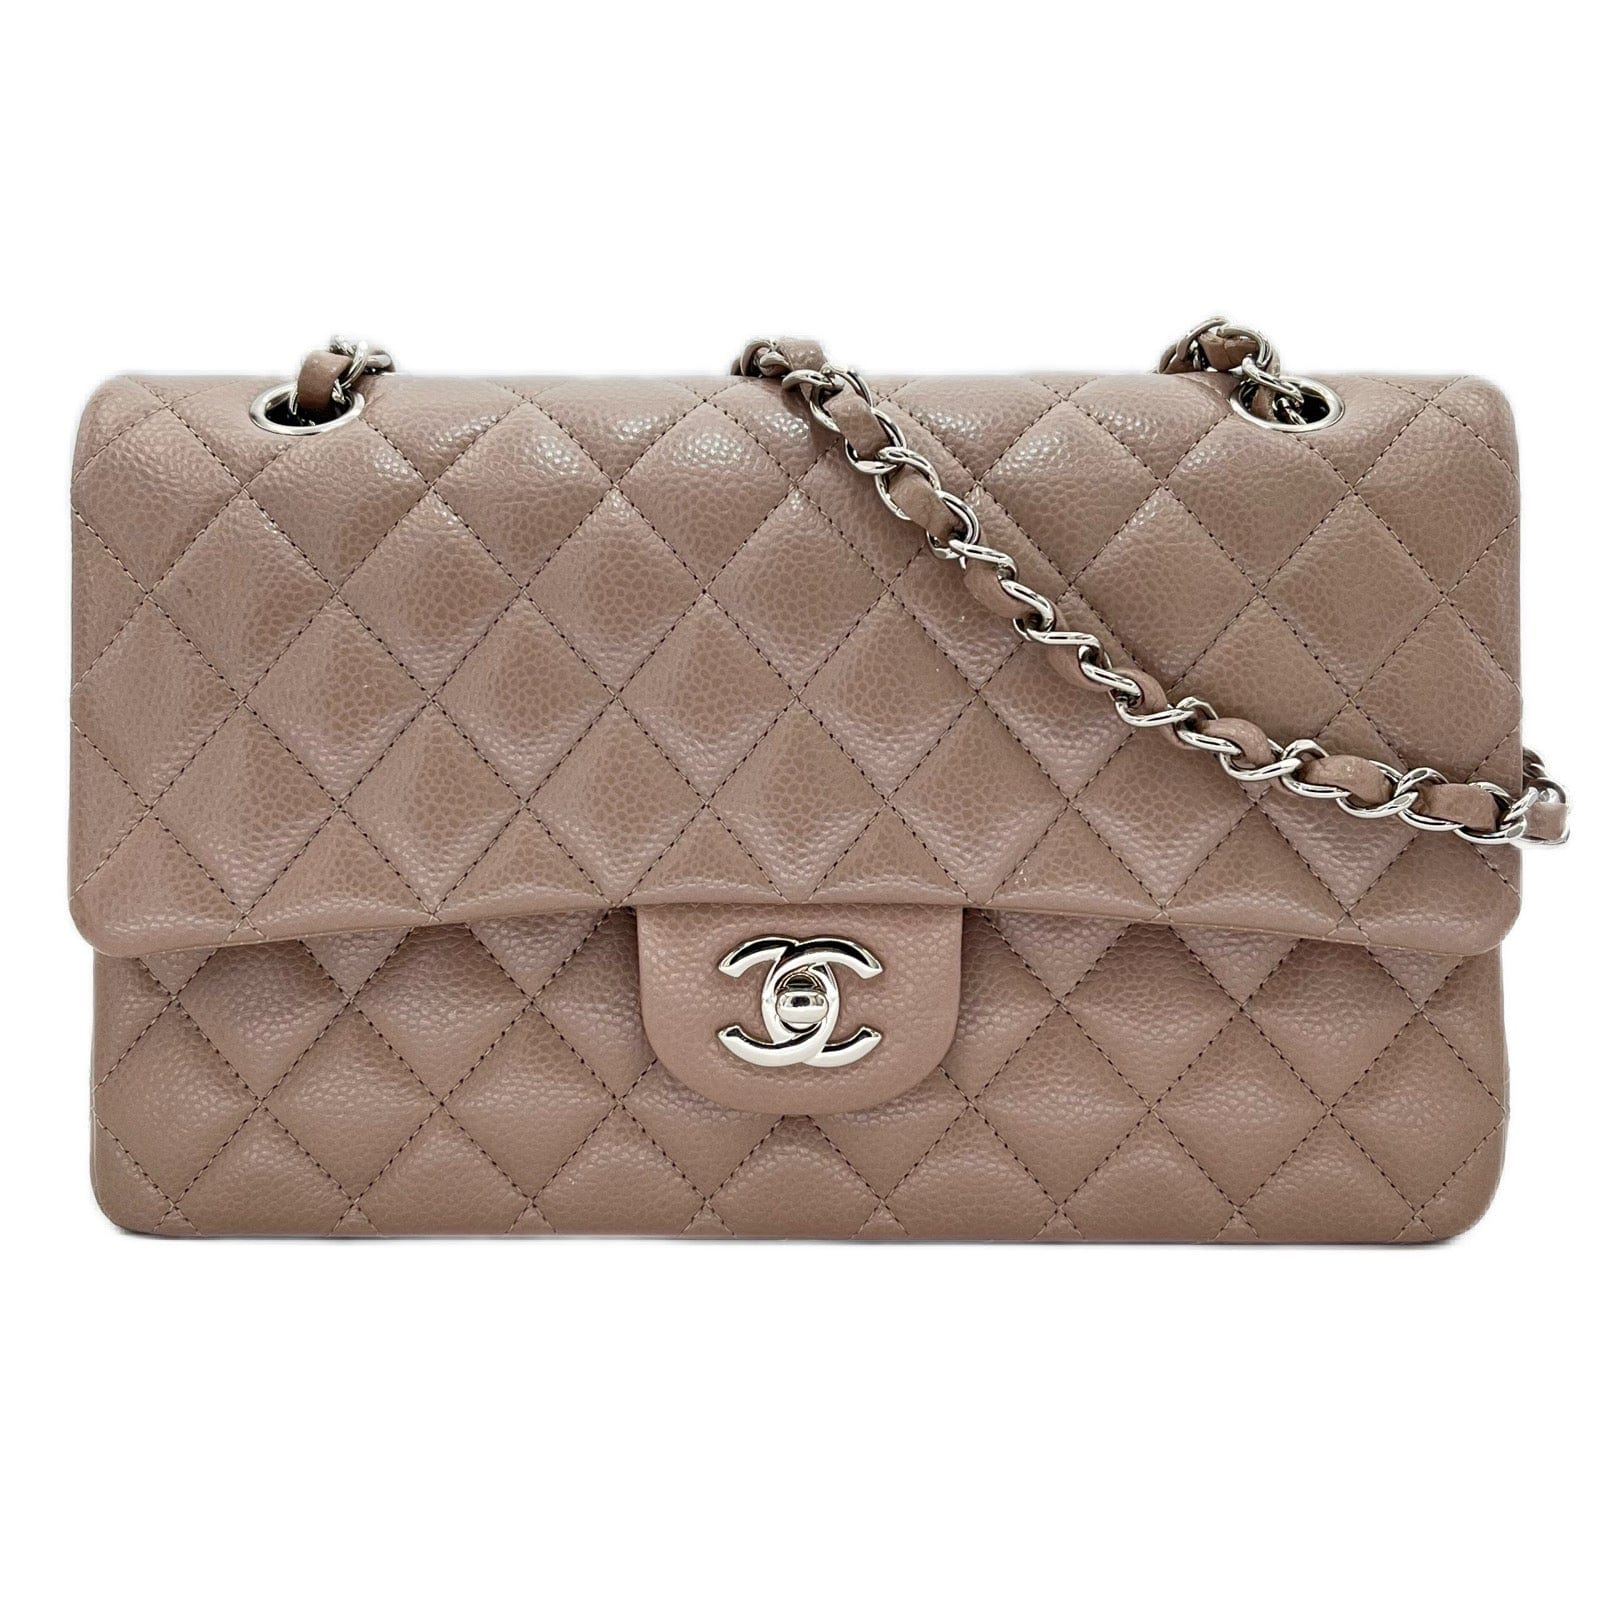 Chanel CHANEL CLASSIC FLAP MEDIUM CHAIN SHOULDER BAG ETOUPE CAVIAR SKIN SHW 90213955